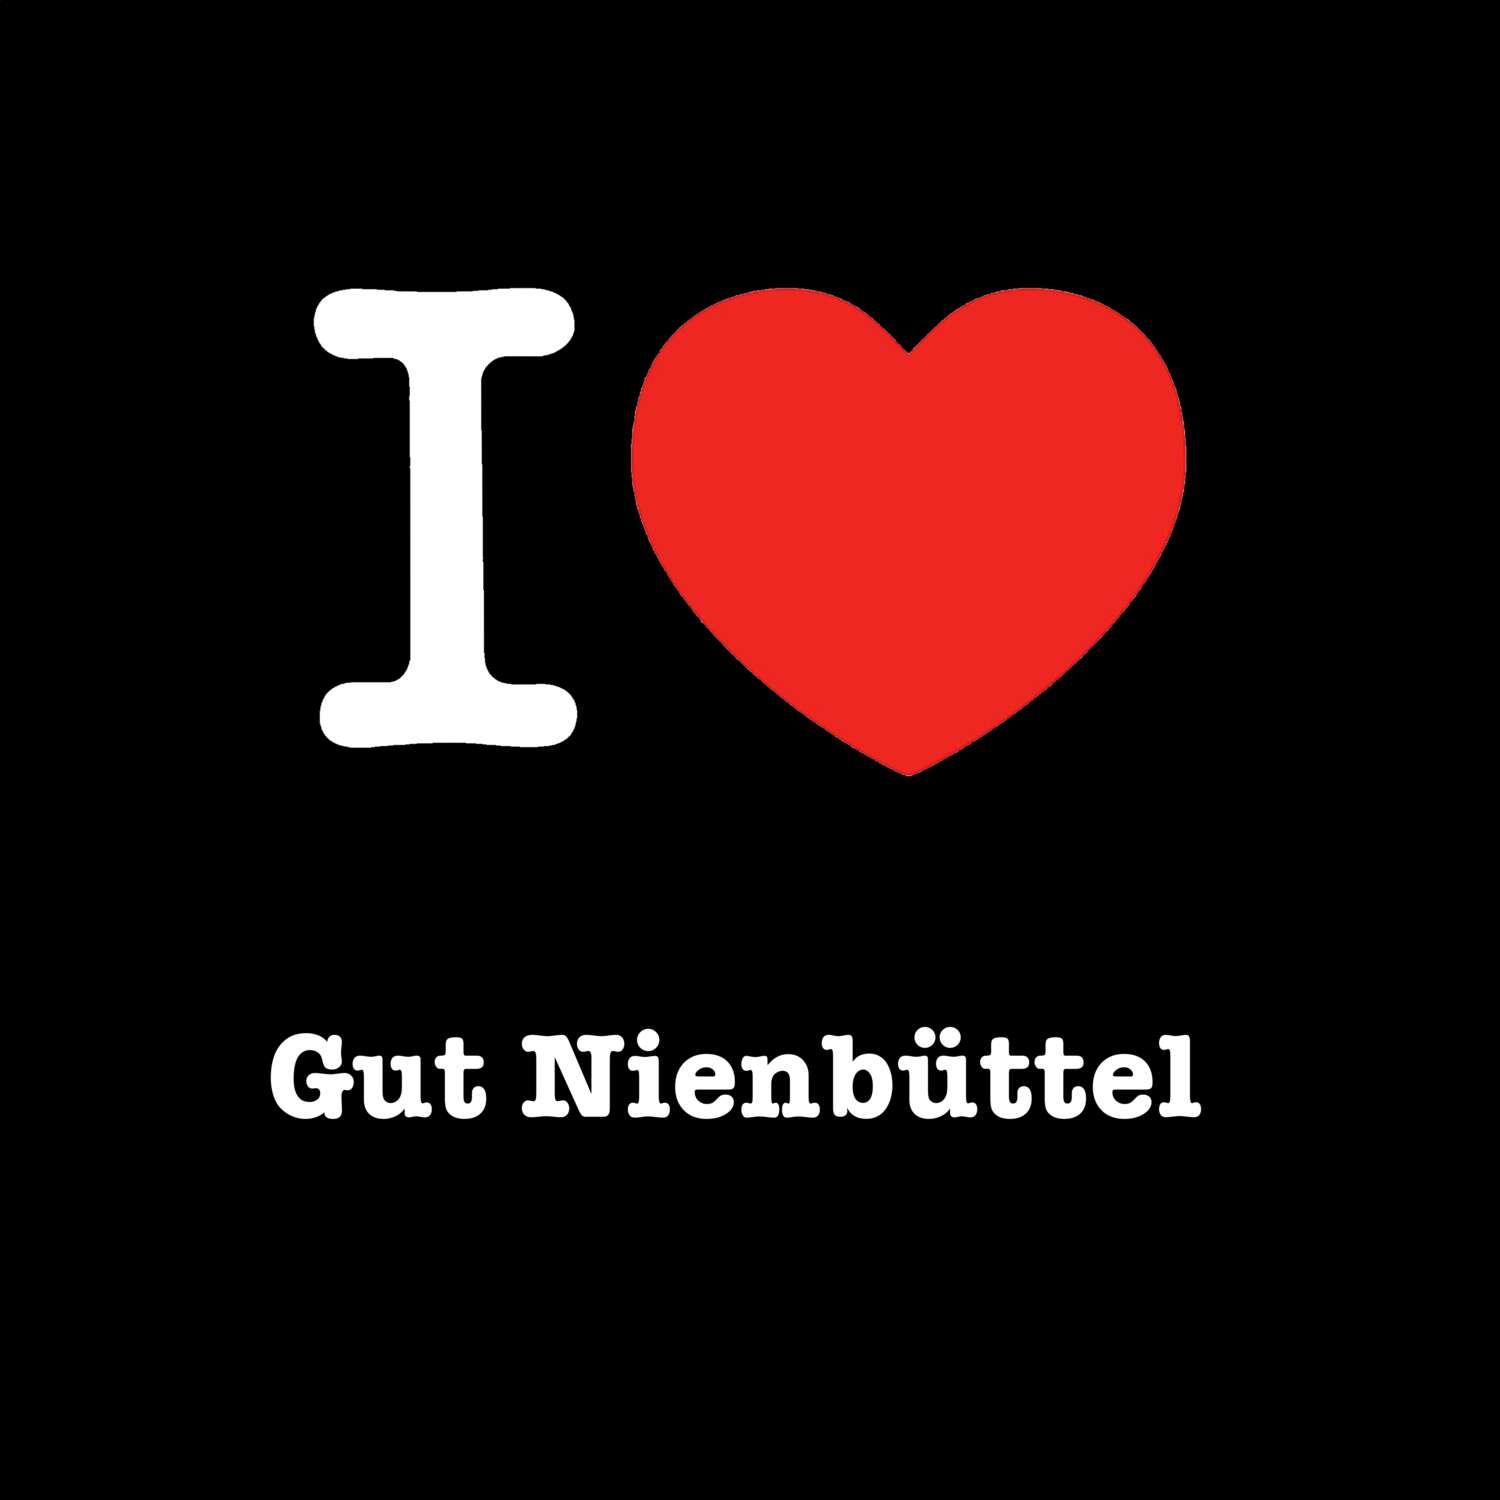 Gut Nienbüttel T-Shirt »I love«